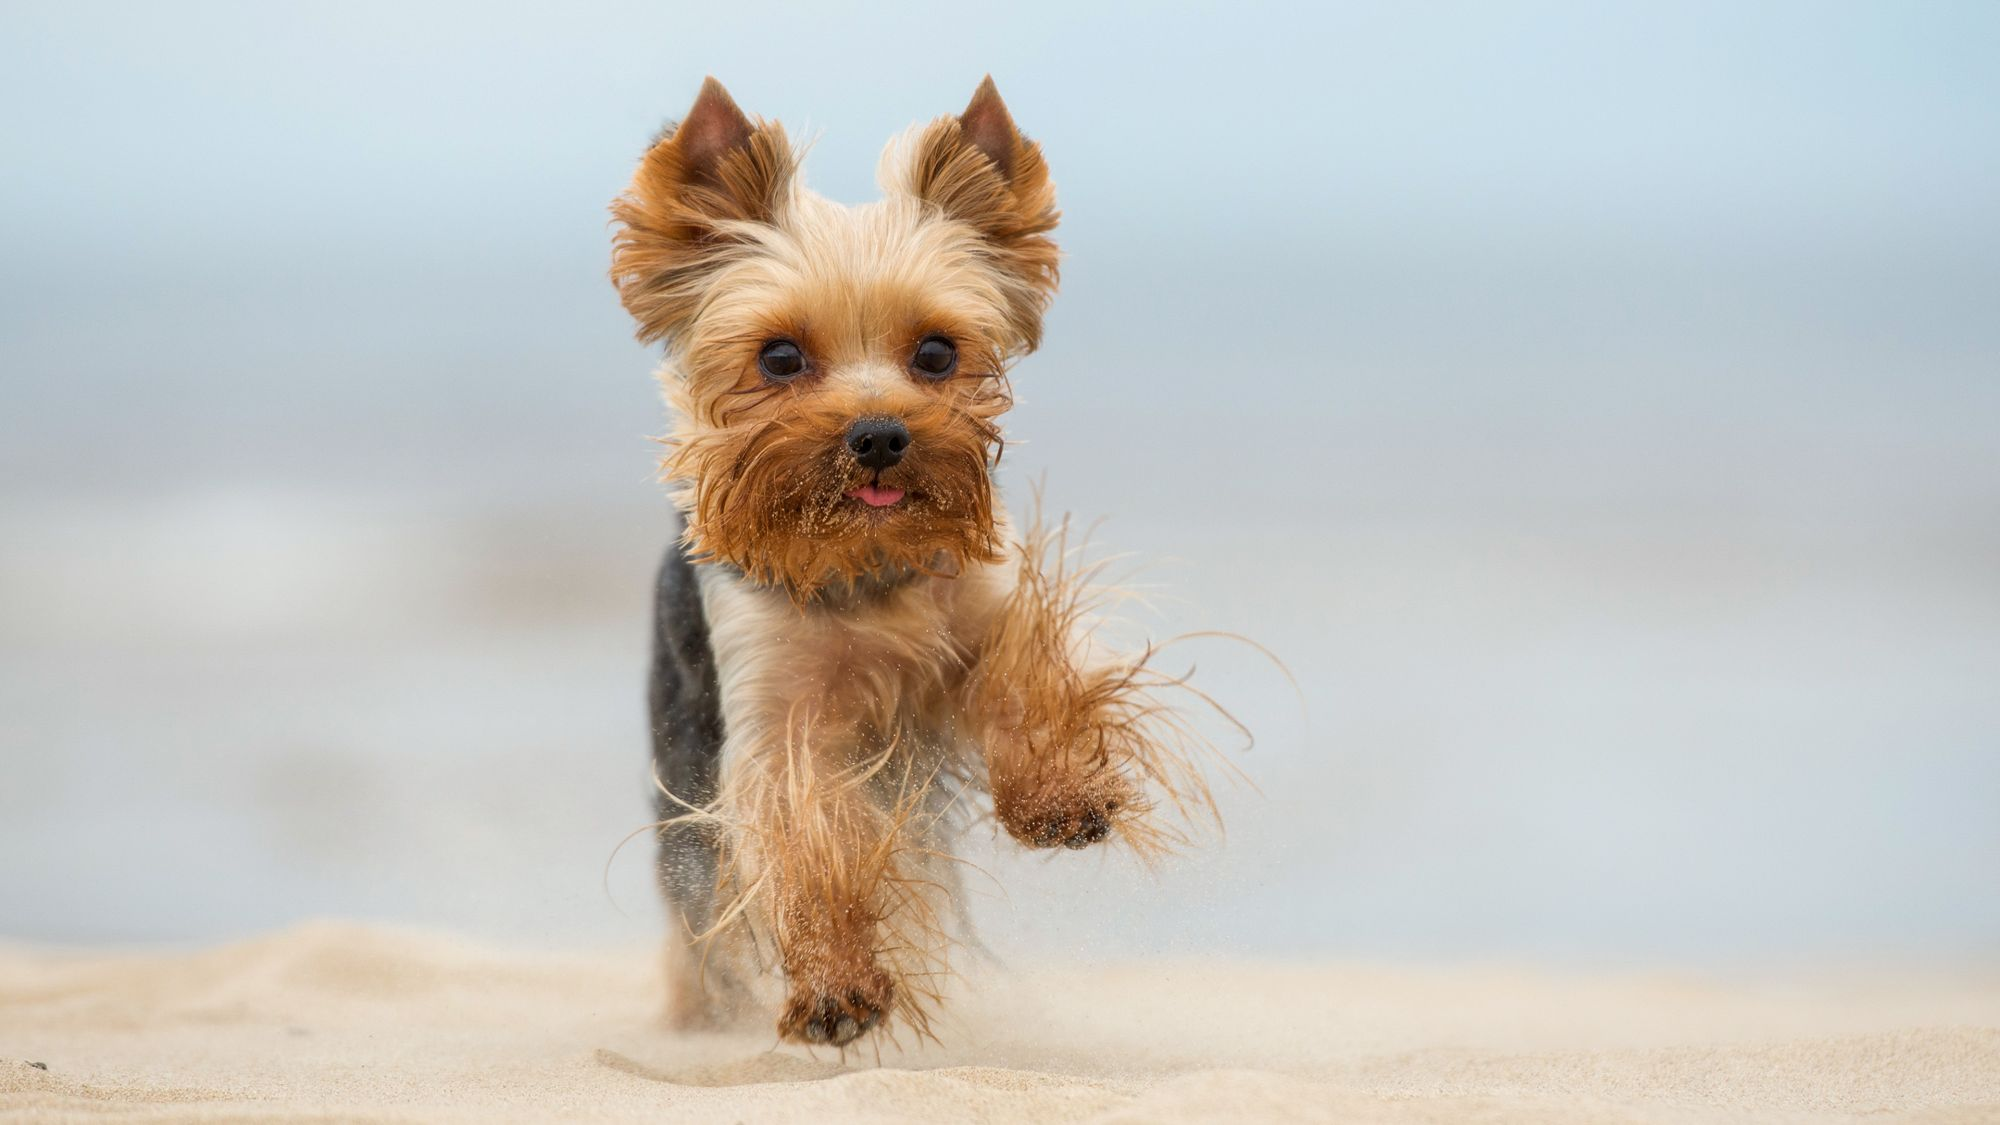 Yorkshire Terrier running on a beach